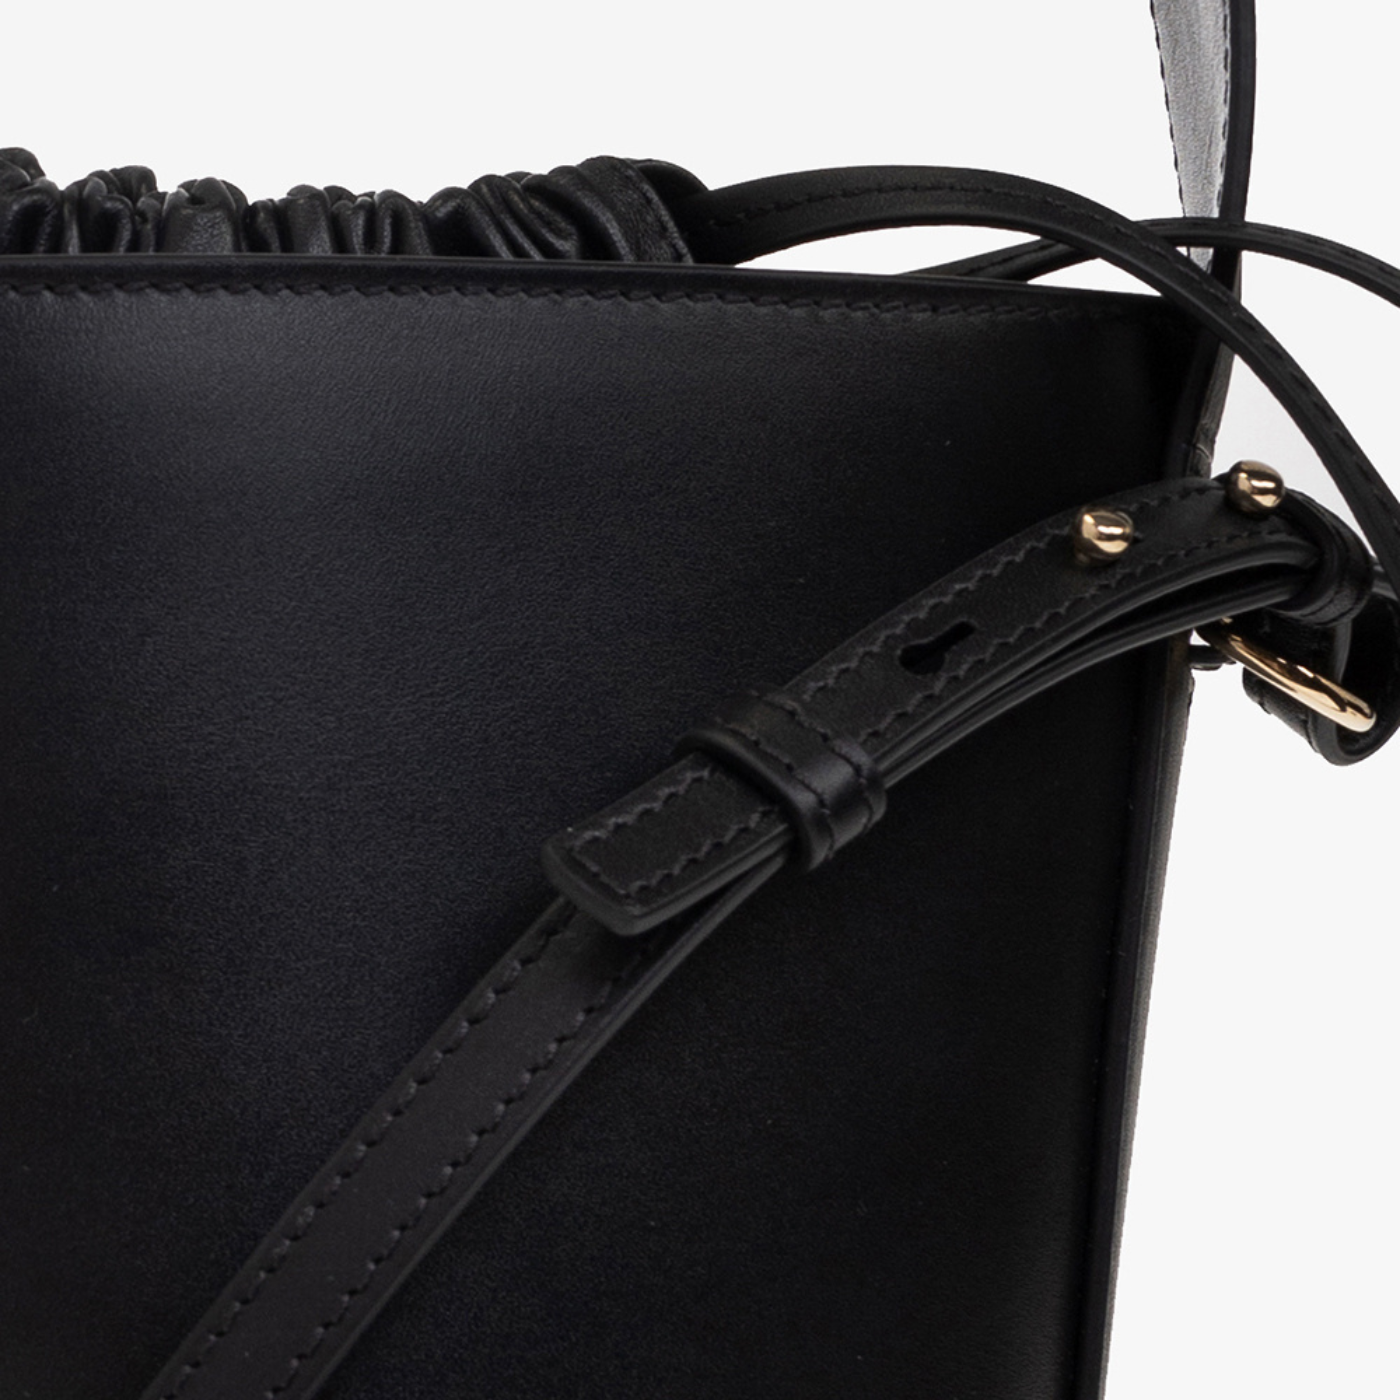 Sense Bucket Bag in Black Handbags CHLOE - LOLAMIR